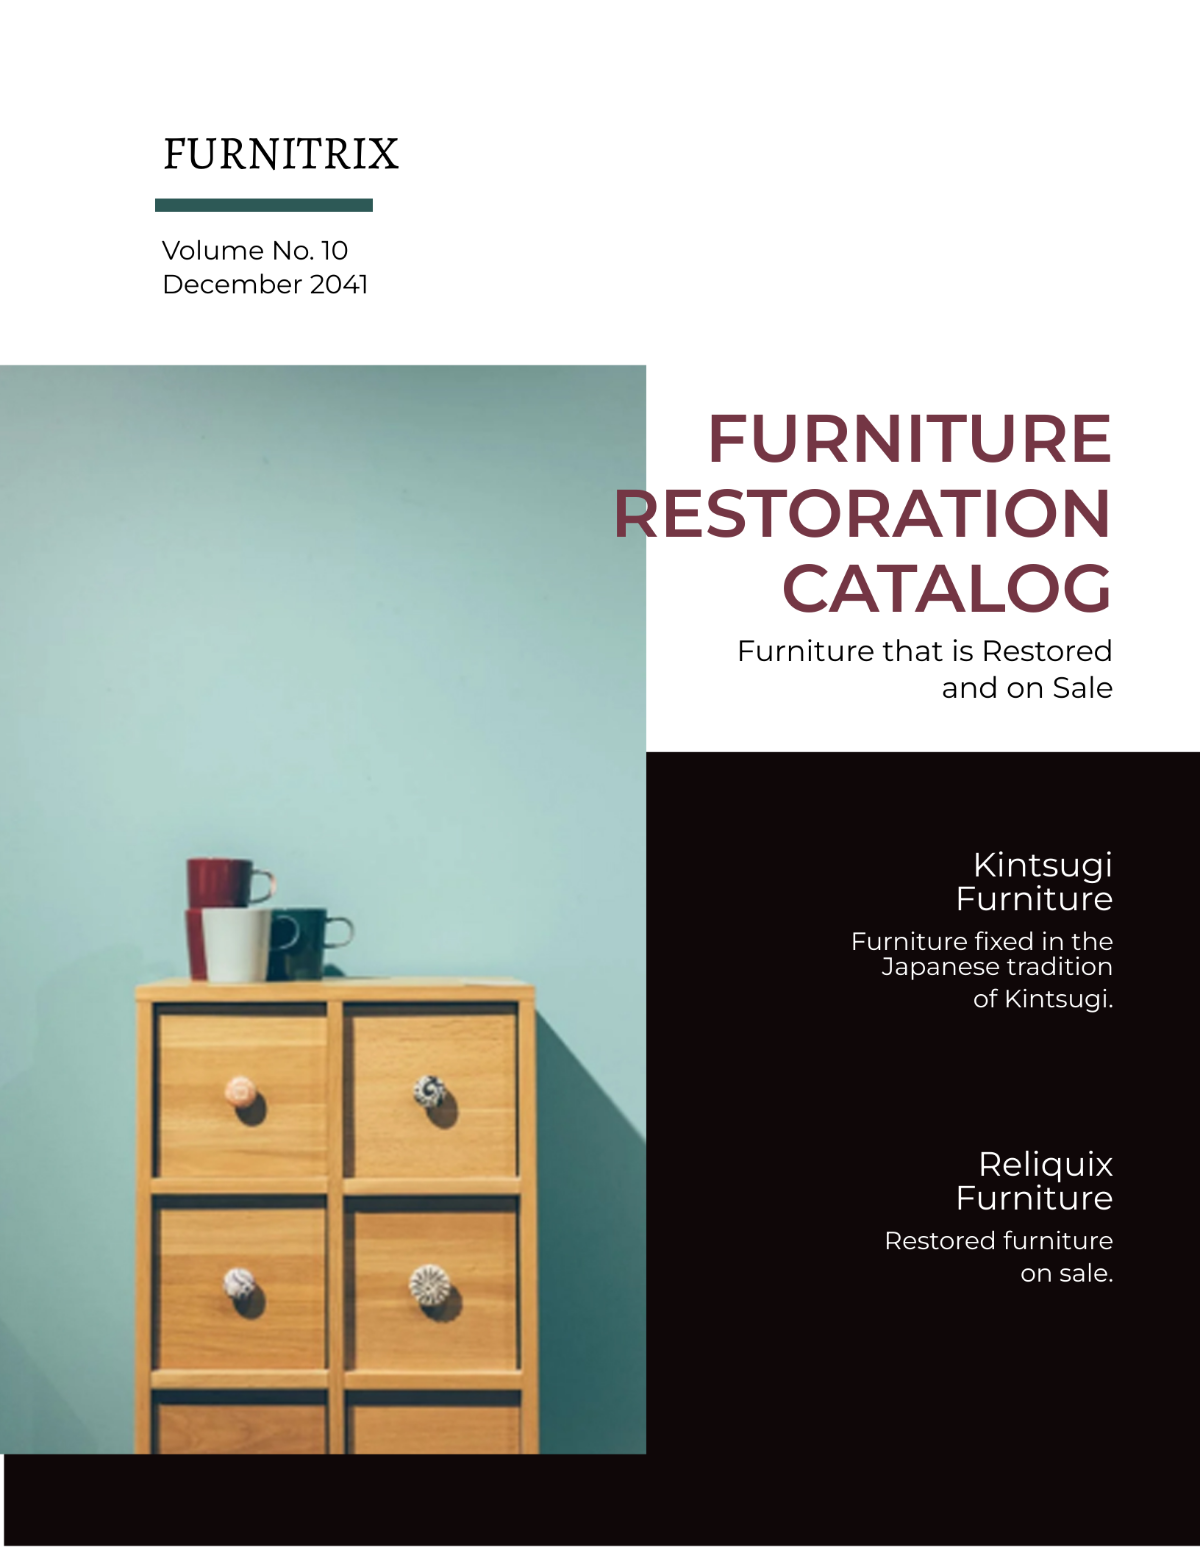 Furniture Restoration Catalog Template